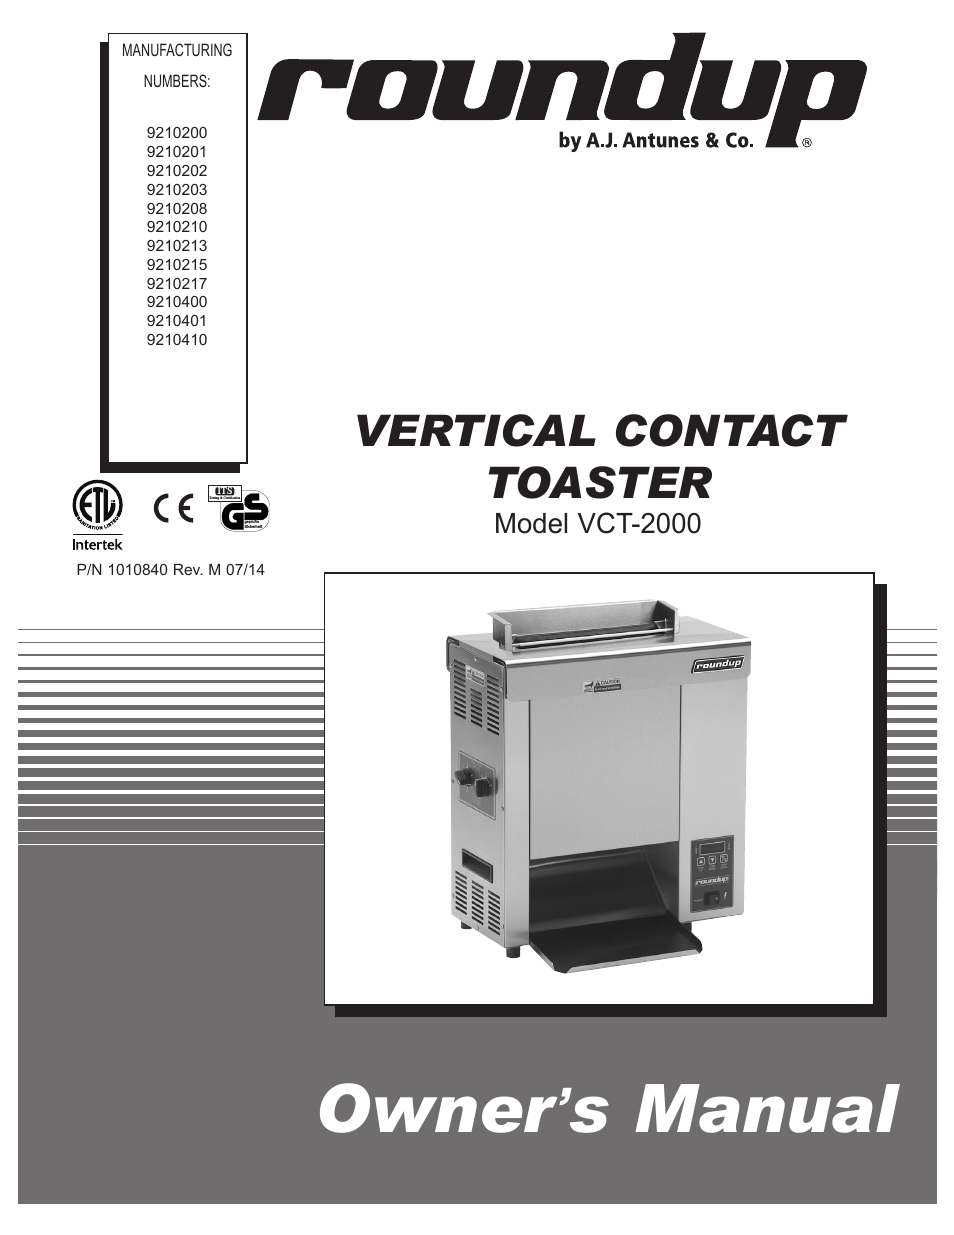 VCT-2000 9210400